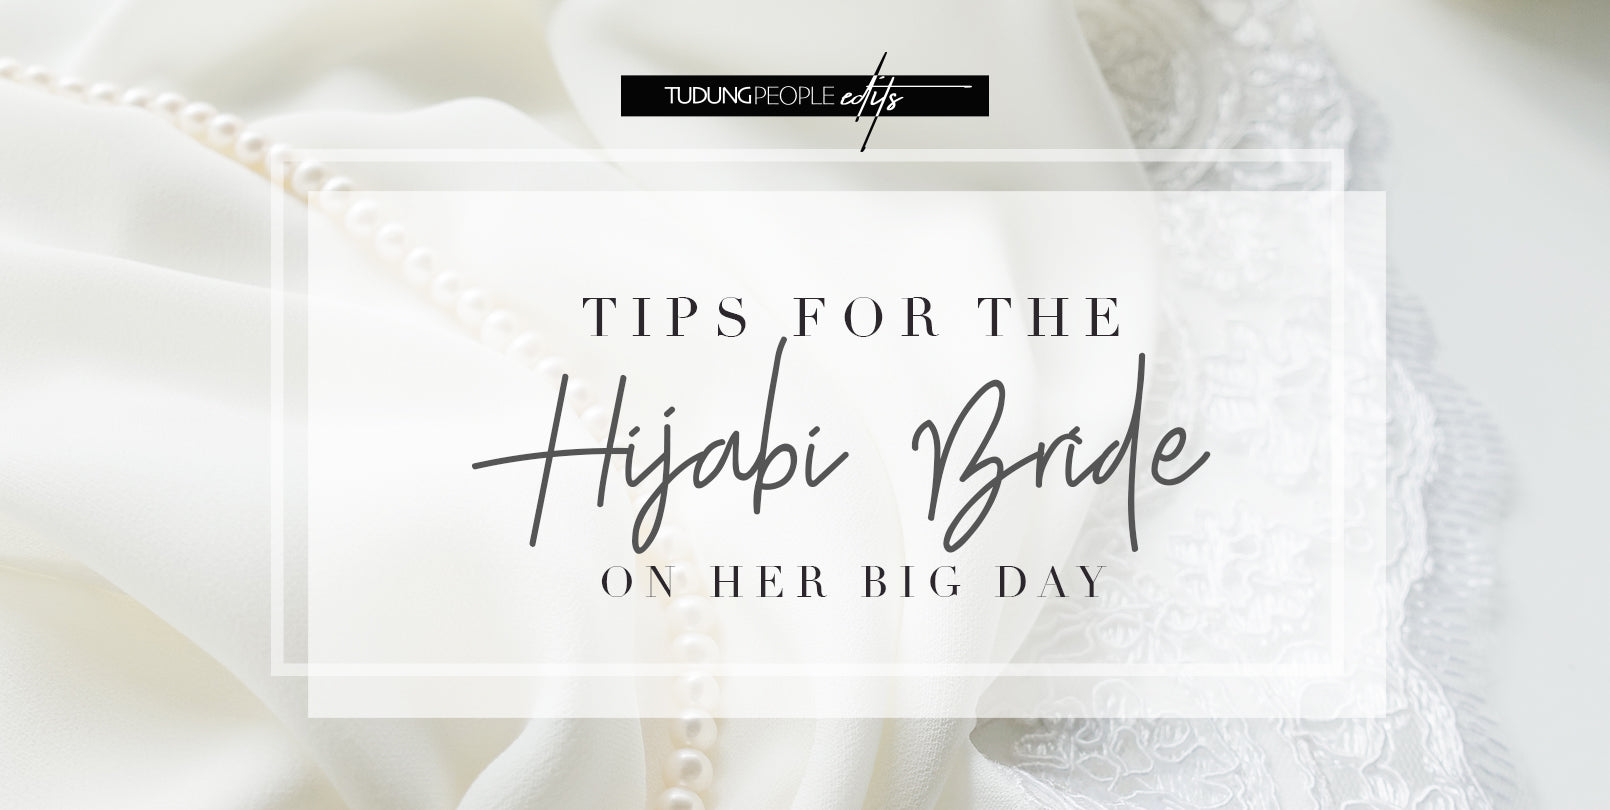 tips-hijabi-bride-1610-x-810-(web)